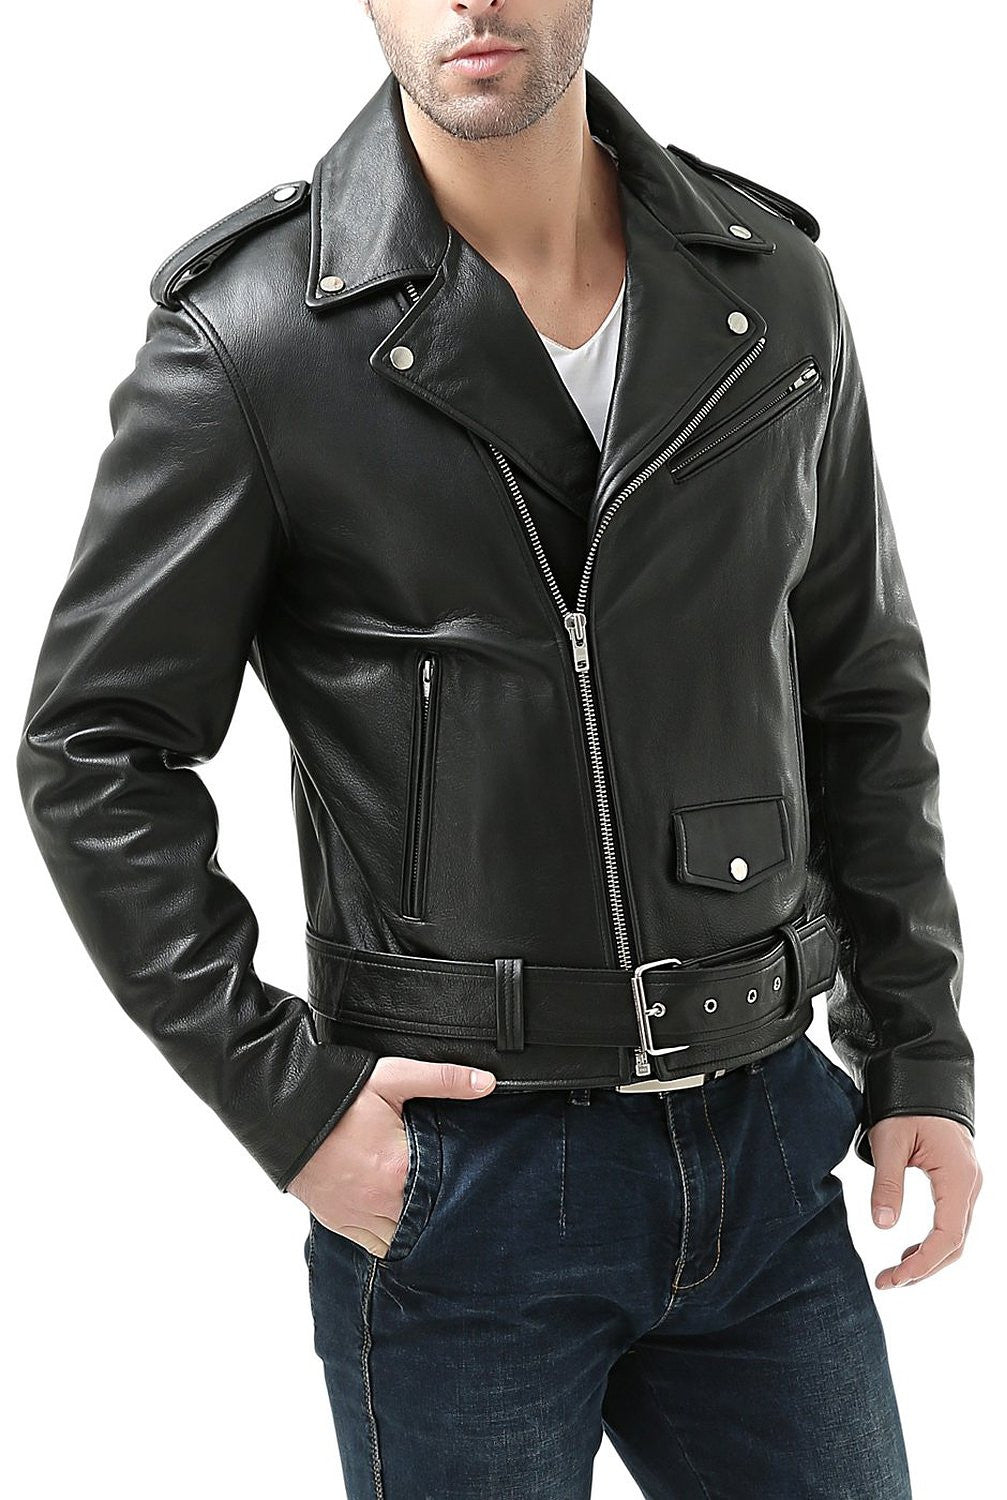 Top Genuine Leather Jacket Men | Logo Genuine Leather | Cowhide Leather  Jacket - Free - Aliexpress